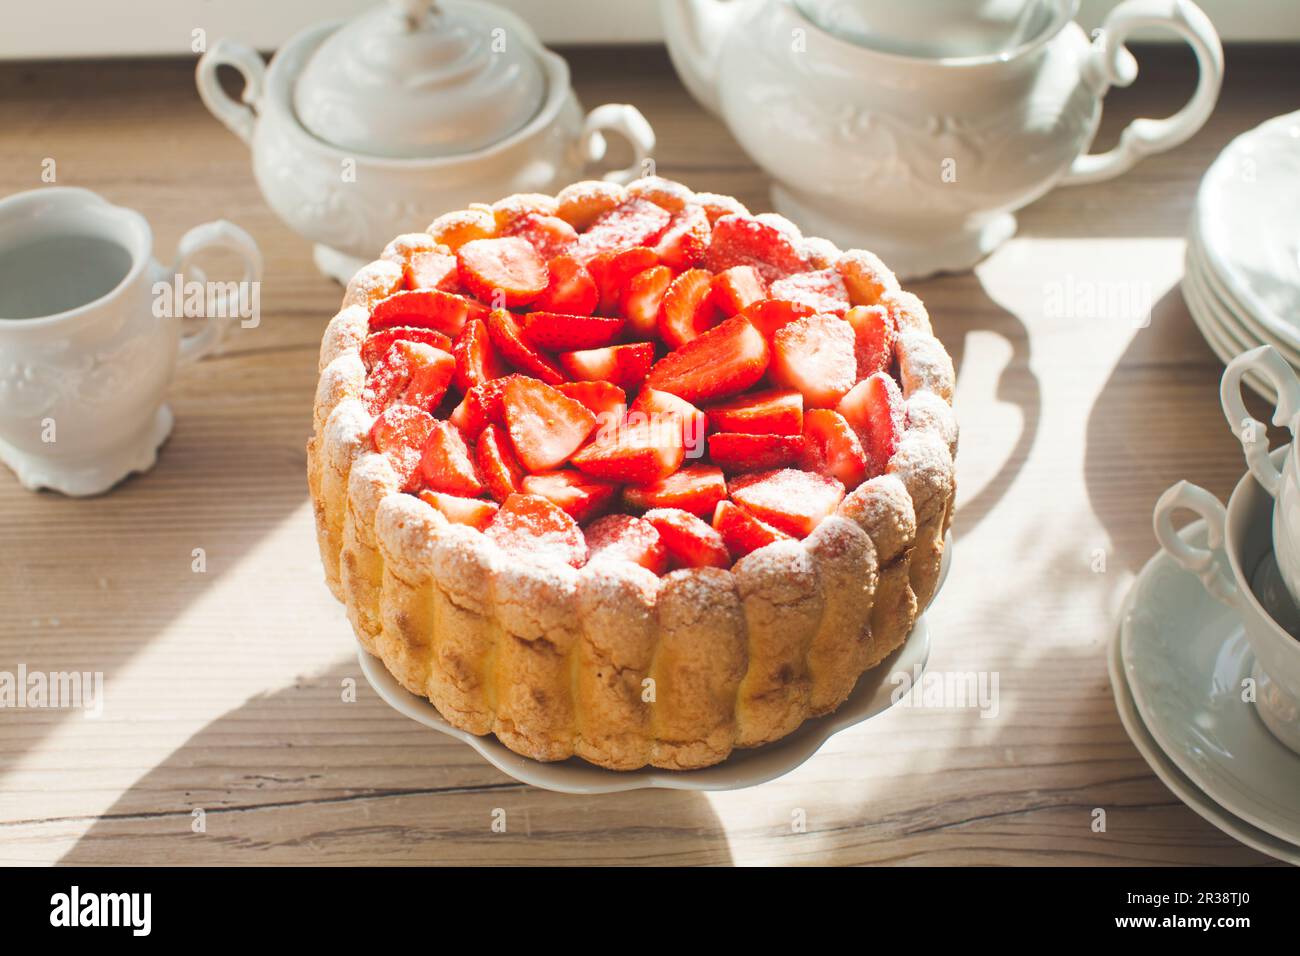 https://c8.alamy.com/comp/2R38TJ0/french-fresh-strawberry-charlotte-sweet-cake-in-the-kitchen-2R38TJ0.jpg